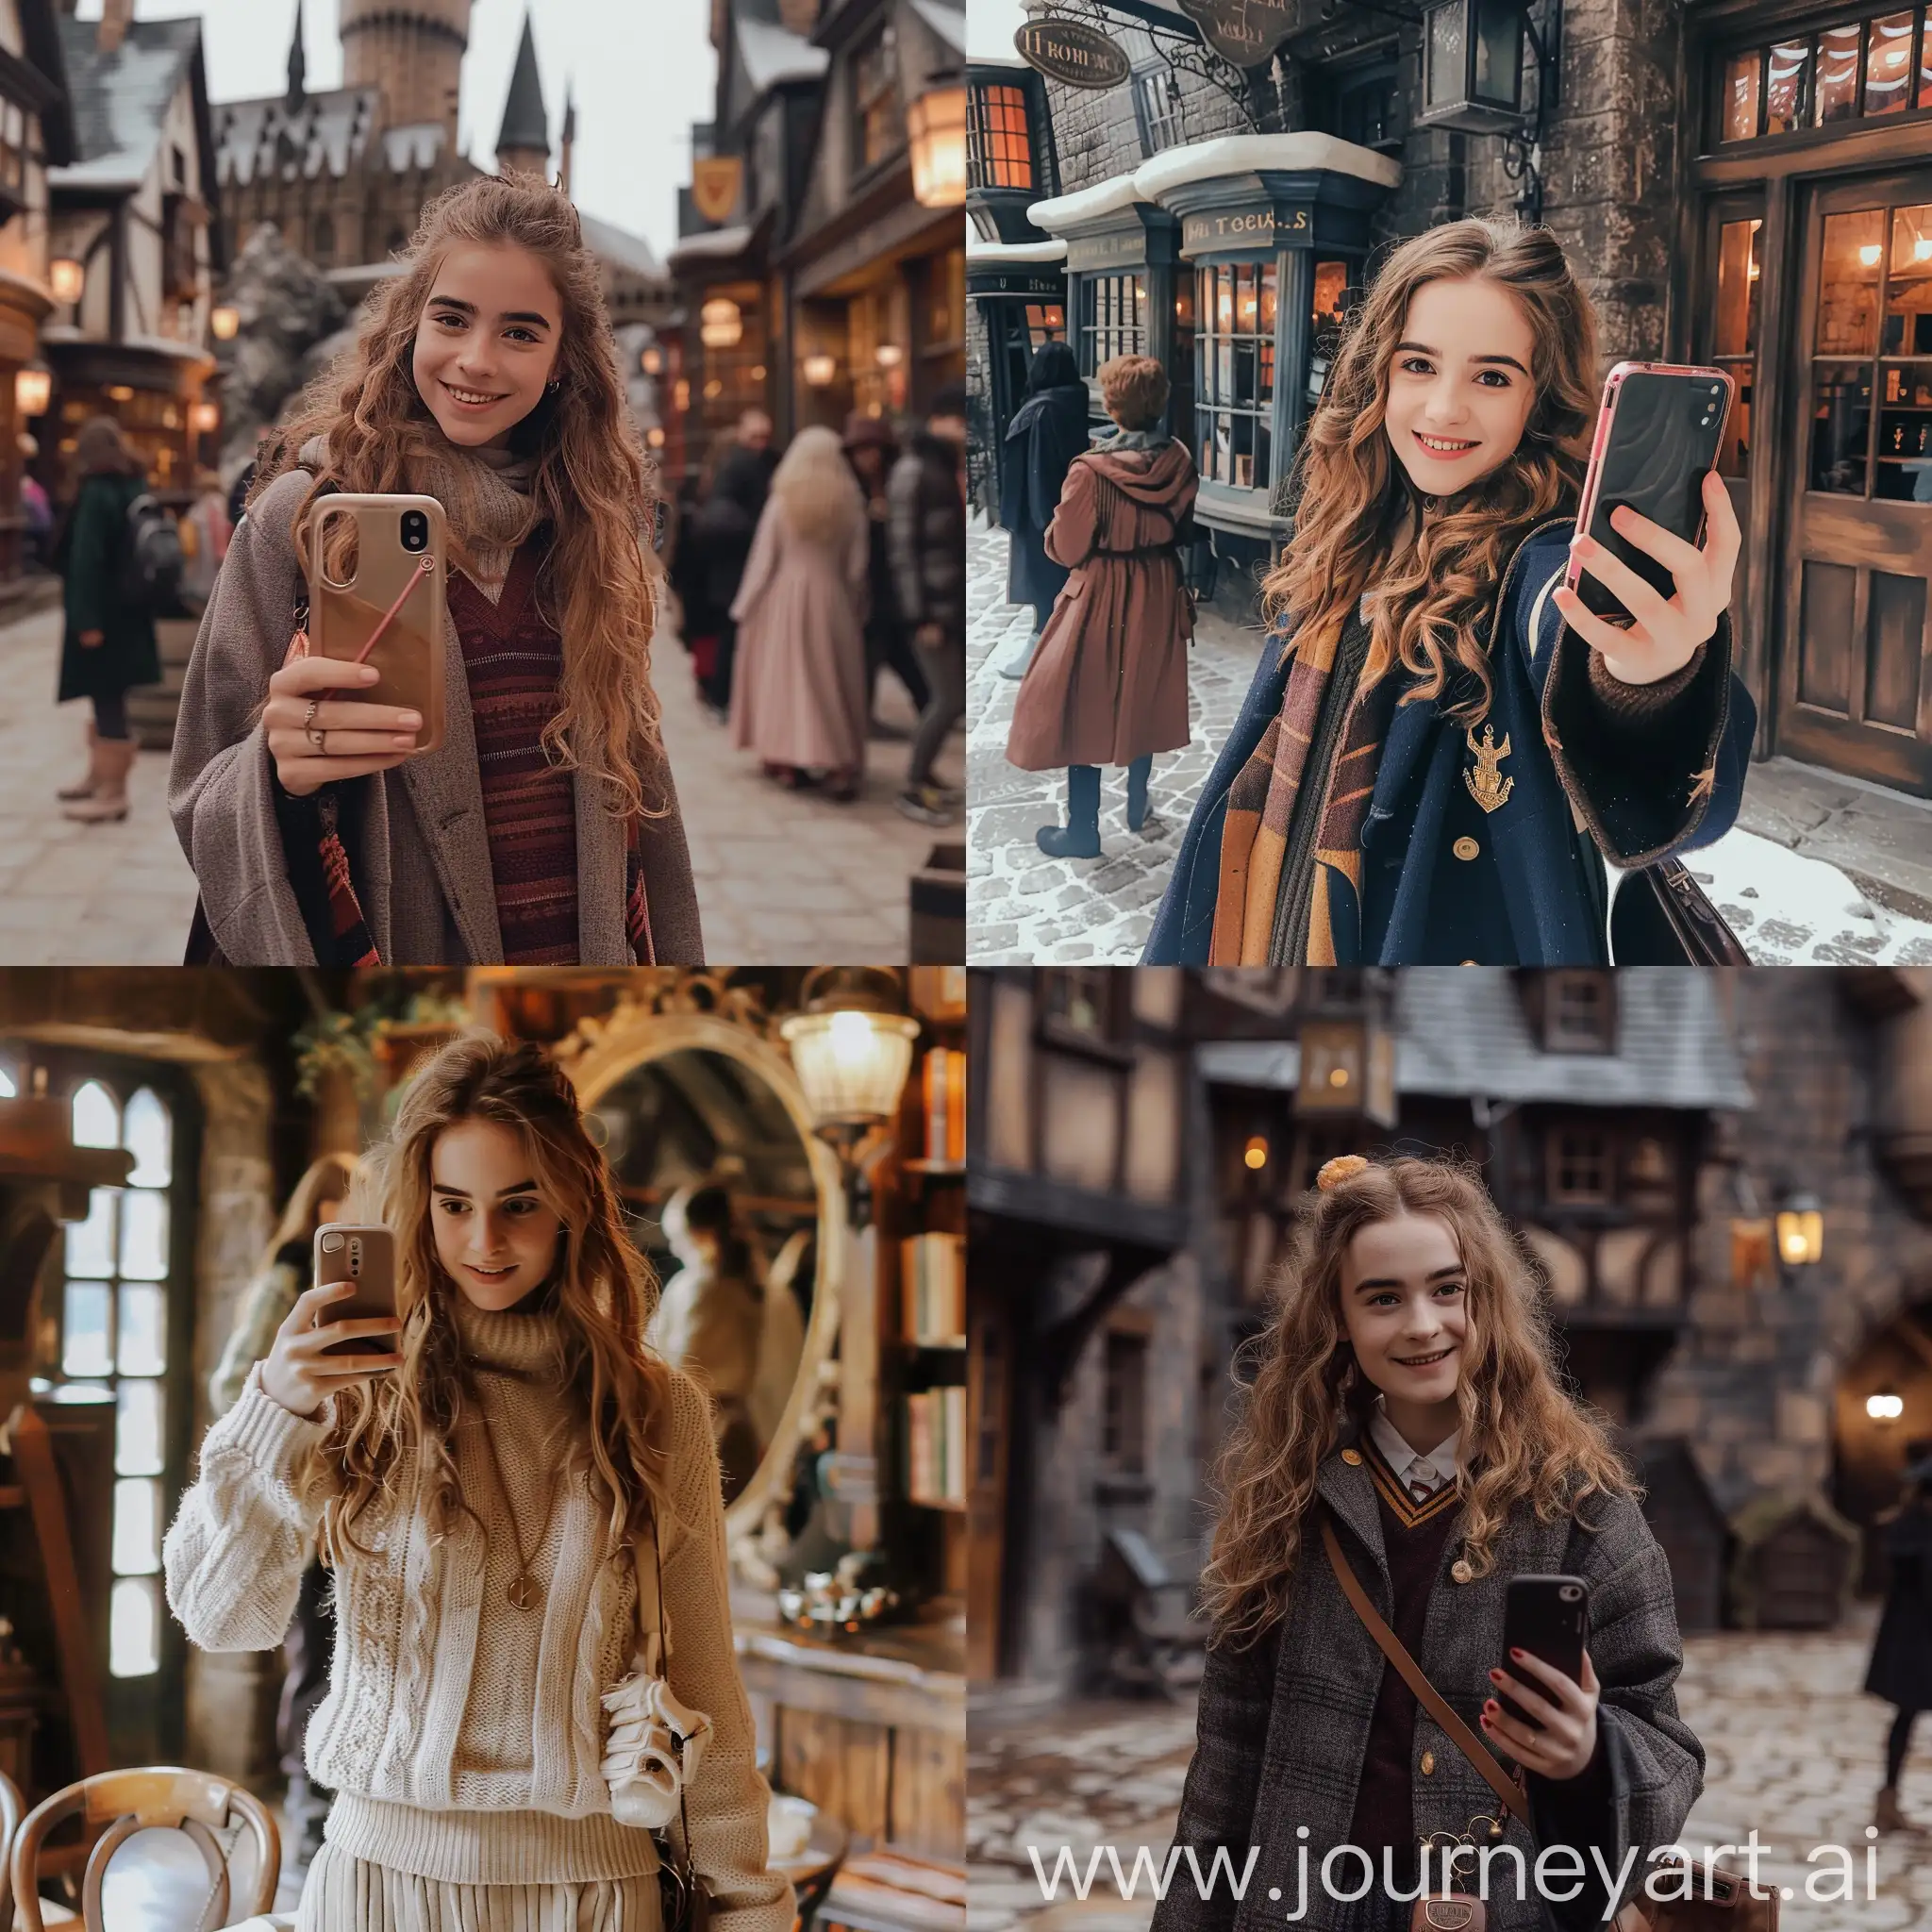 Instagram photo: Hermione Granger taking a selfie at hogsmeade, Fashion Blogger aesthetic, warm color tones